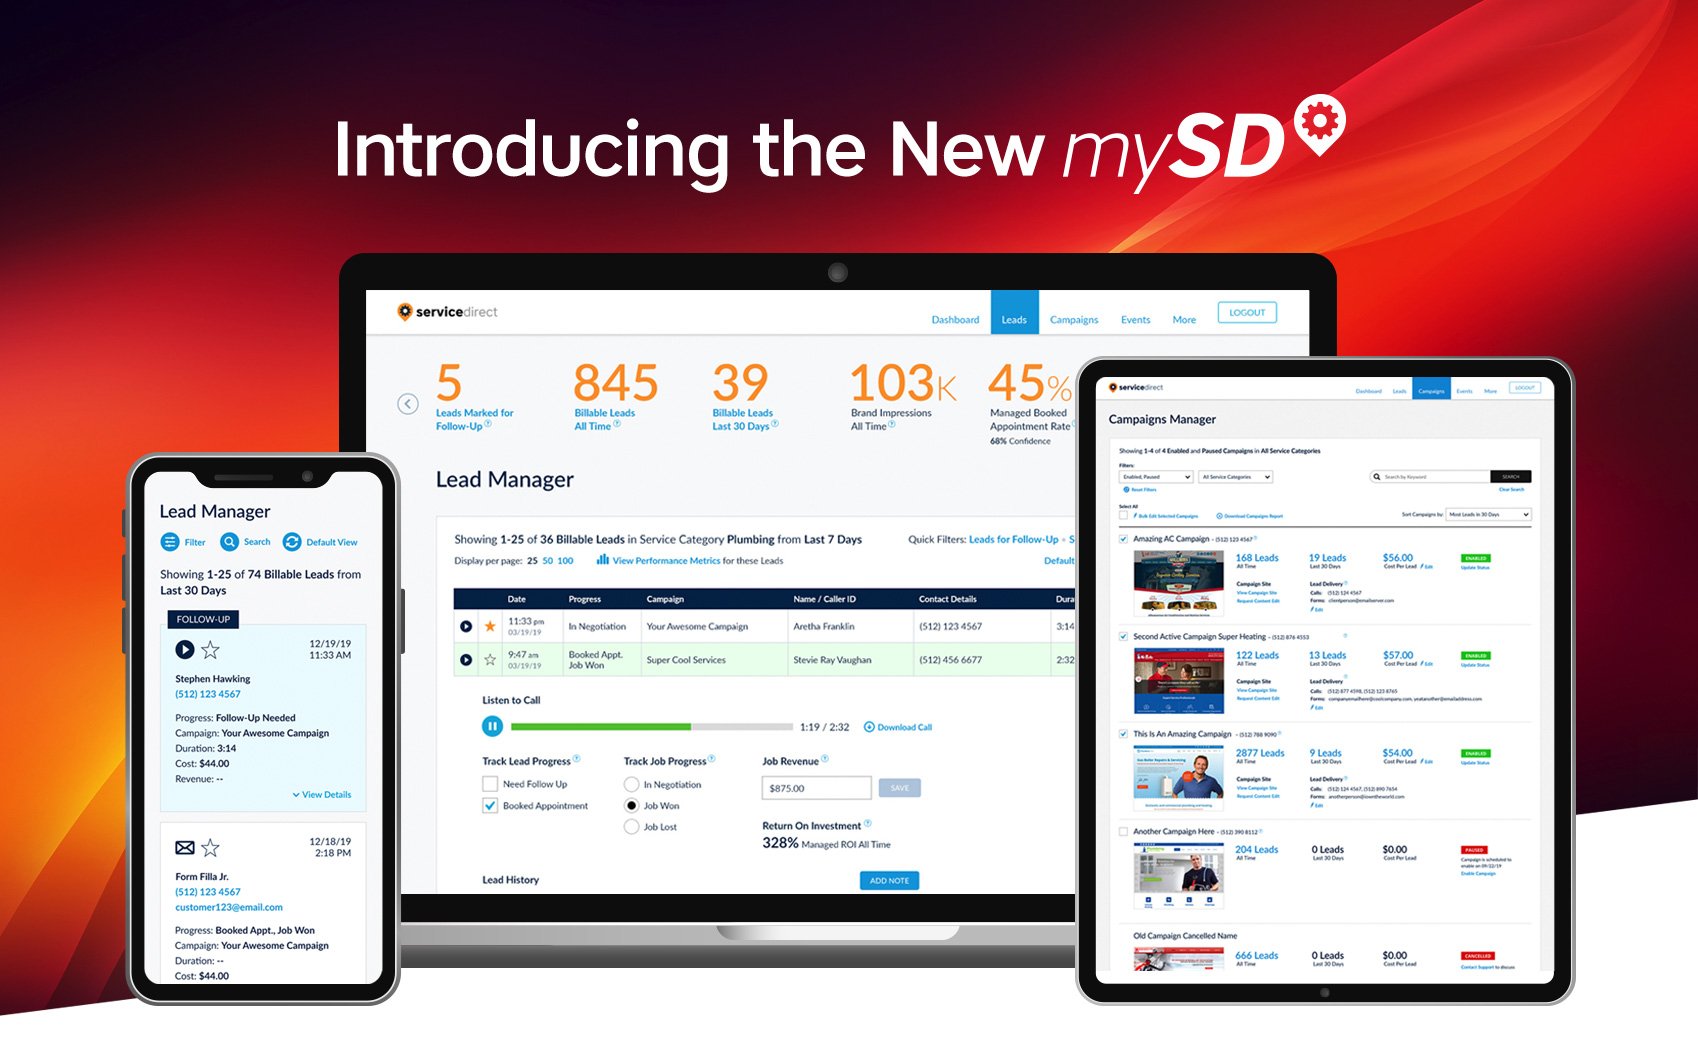 mySD by Service Direct lead generation platform overview image